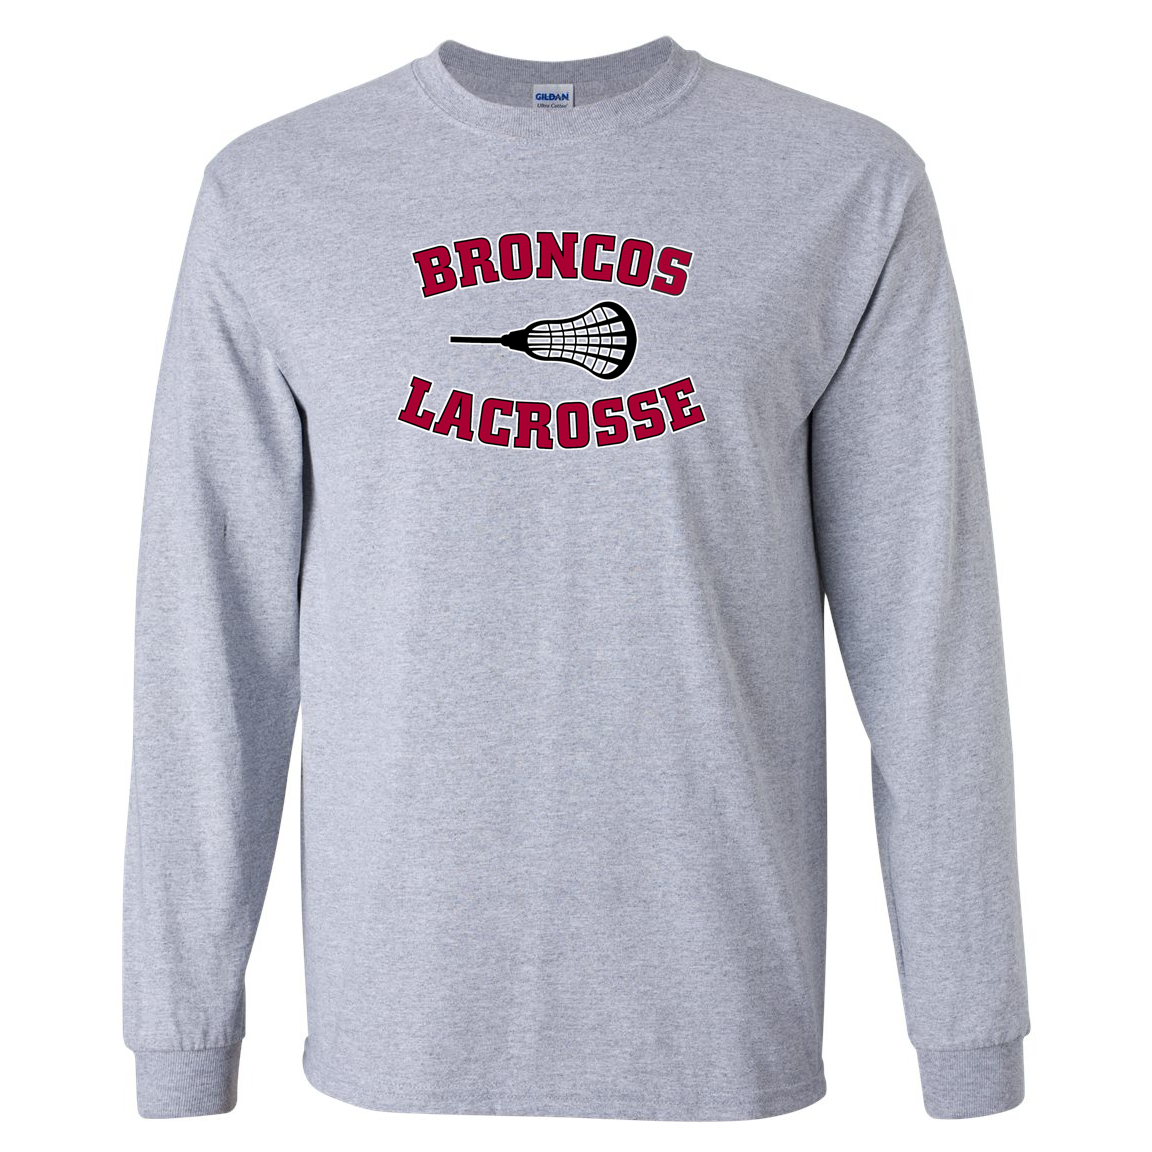 Bailey Middle School Lacrosse Gildan Ultra Cotton Long Sleeve Shirt